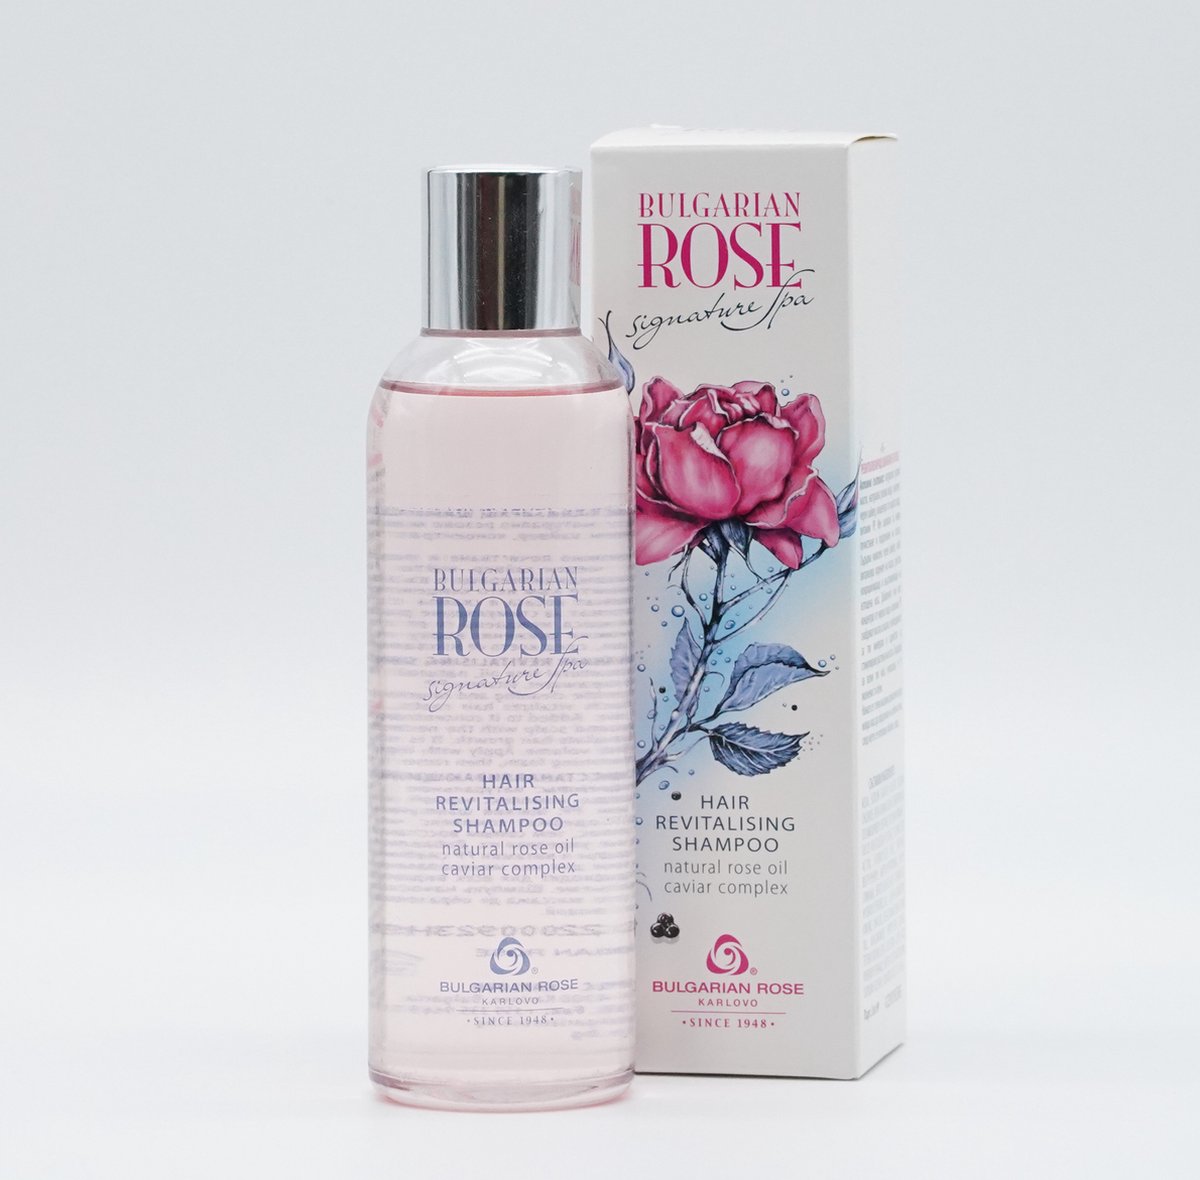 Bulgarian Rose Signature Spa - Revitaliserende Shampoo voor beschadigd haar - Vitaliteit en volume